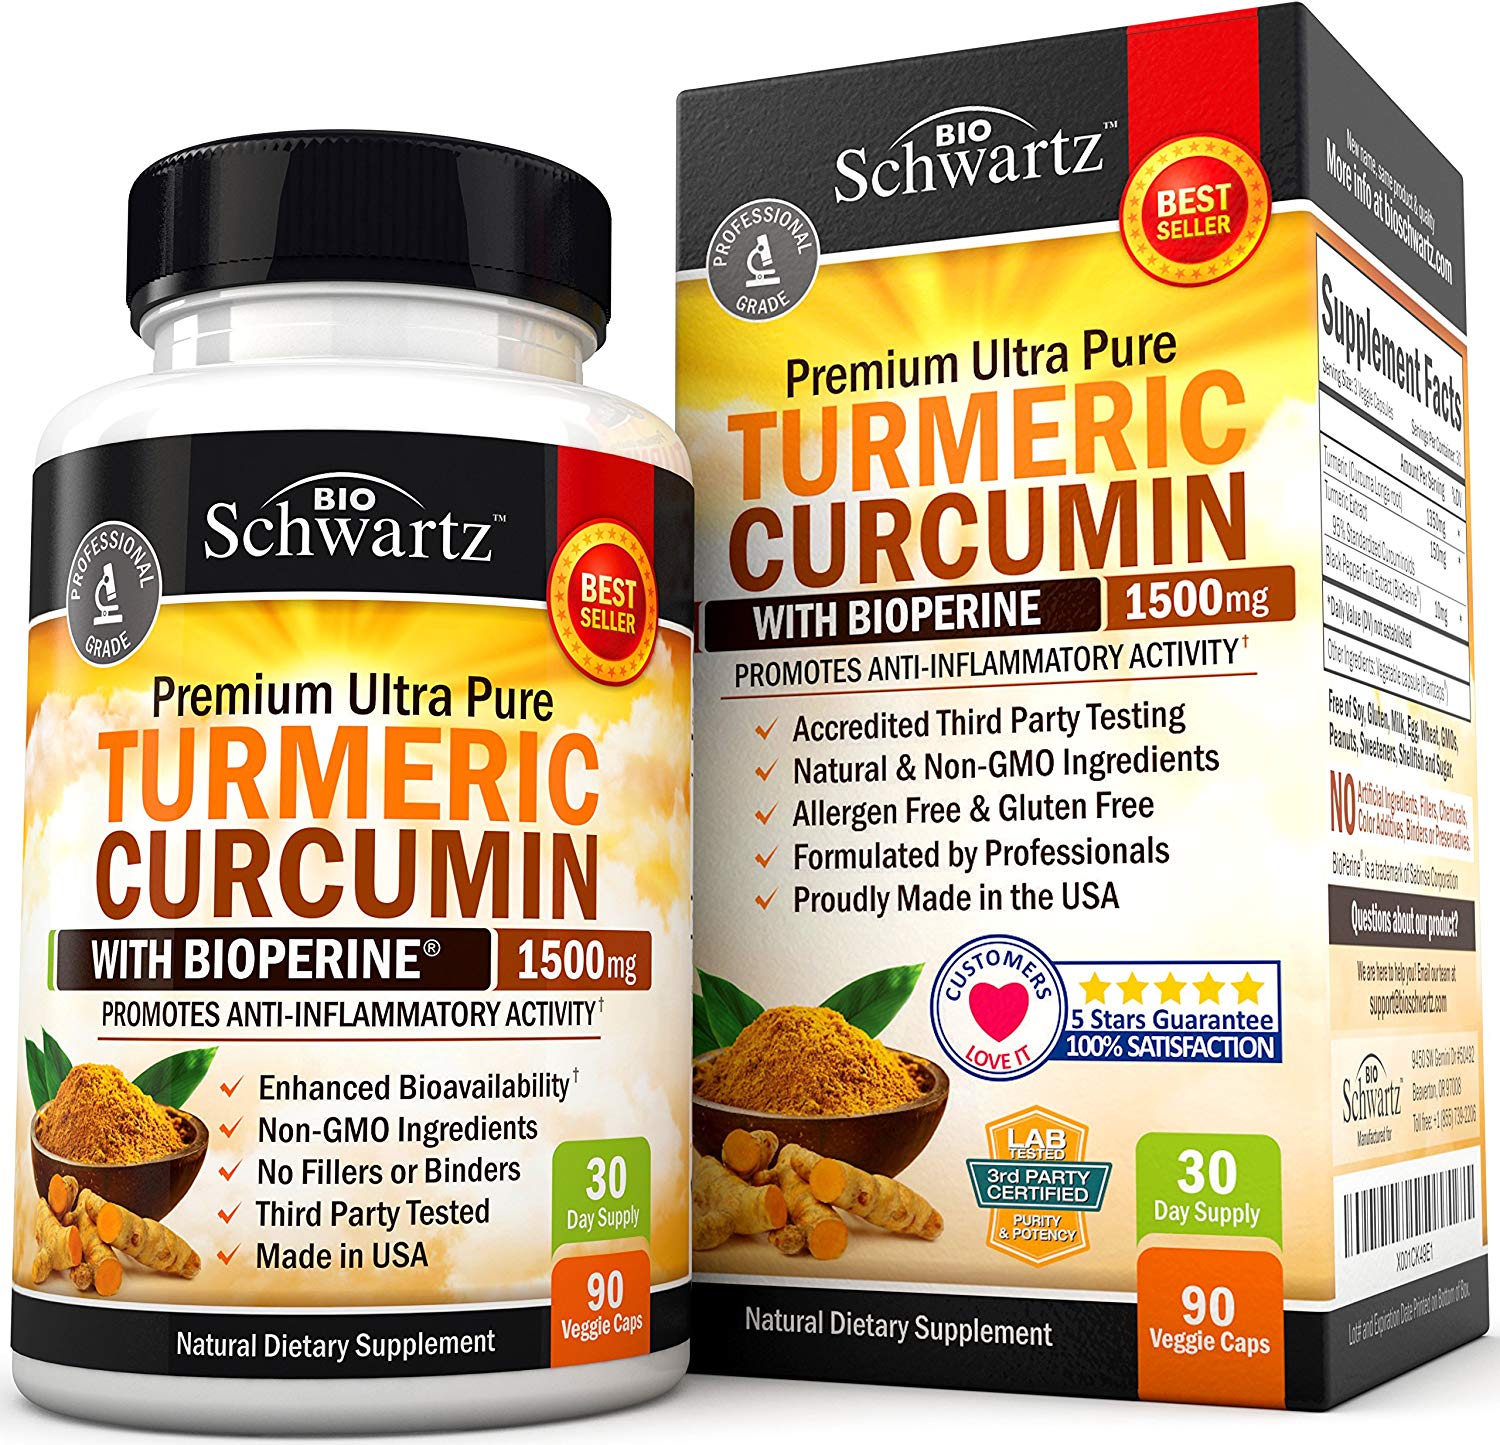 BioSchwartz Gluten Free Turmeric Curcumin with Bioperine, 1500mg